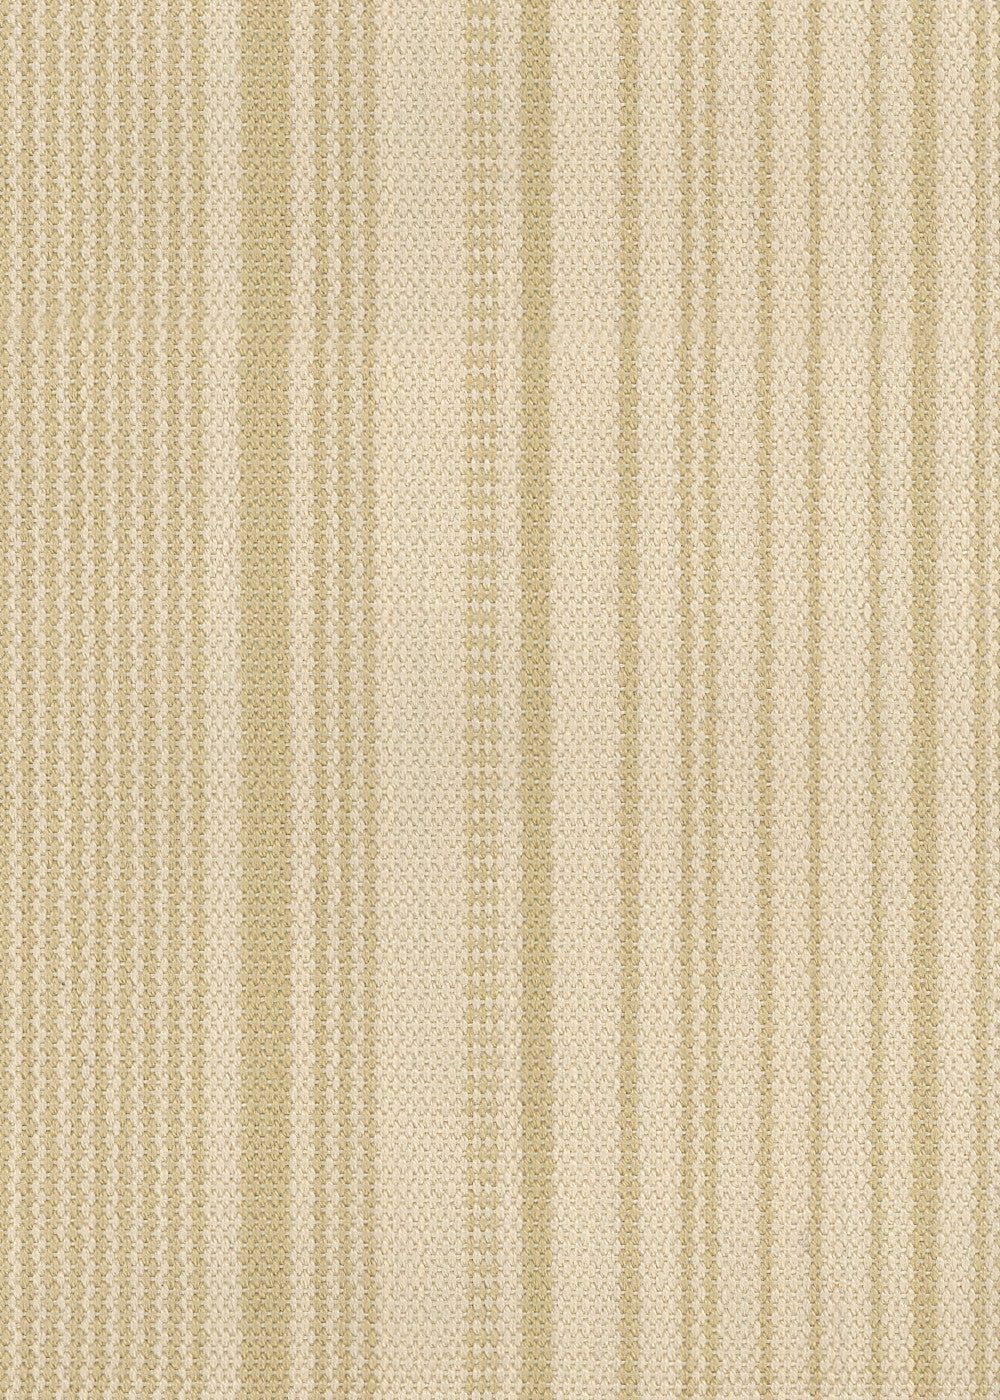 farmhouse fabric with woven beige stripe